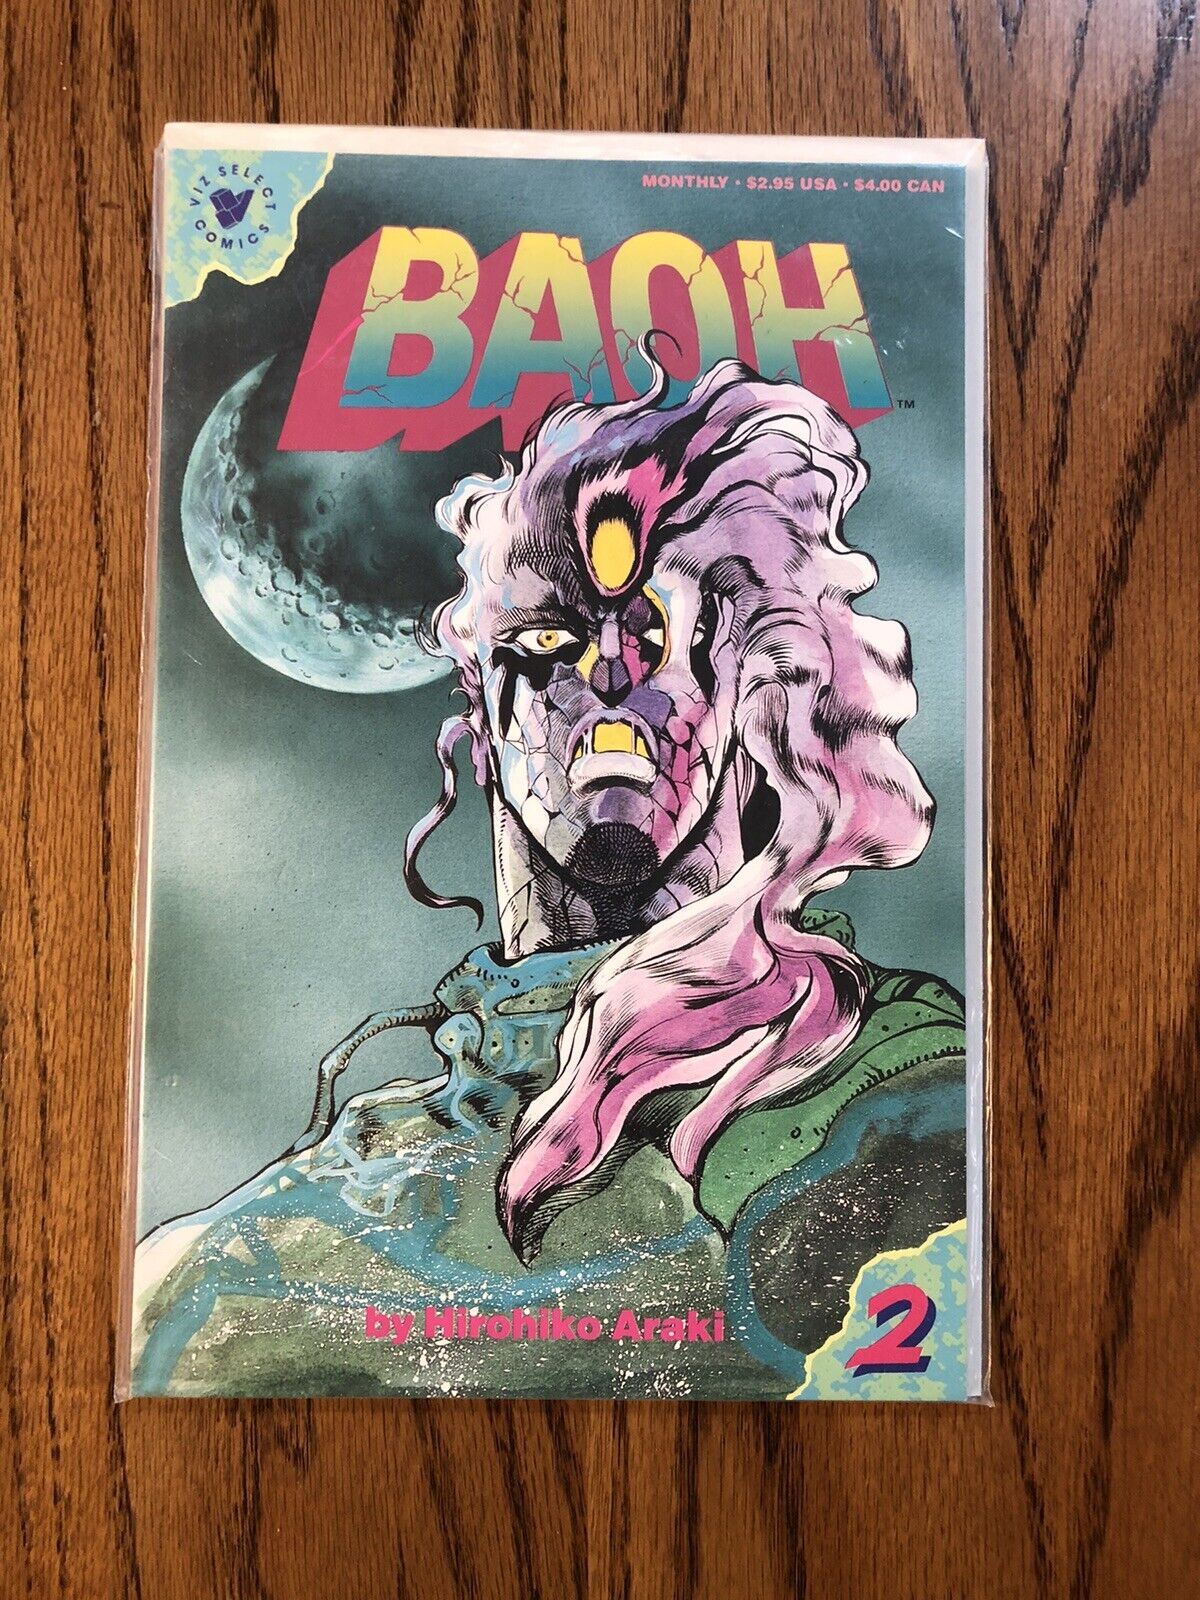 BAOH #2 (VIZ COMICS; HIROHIKO ARAKI; MANGA; 1990)